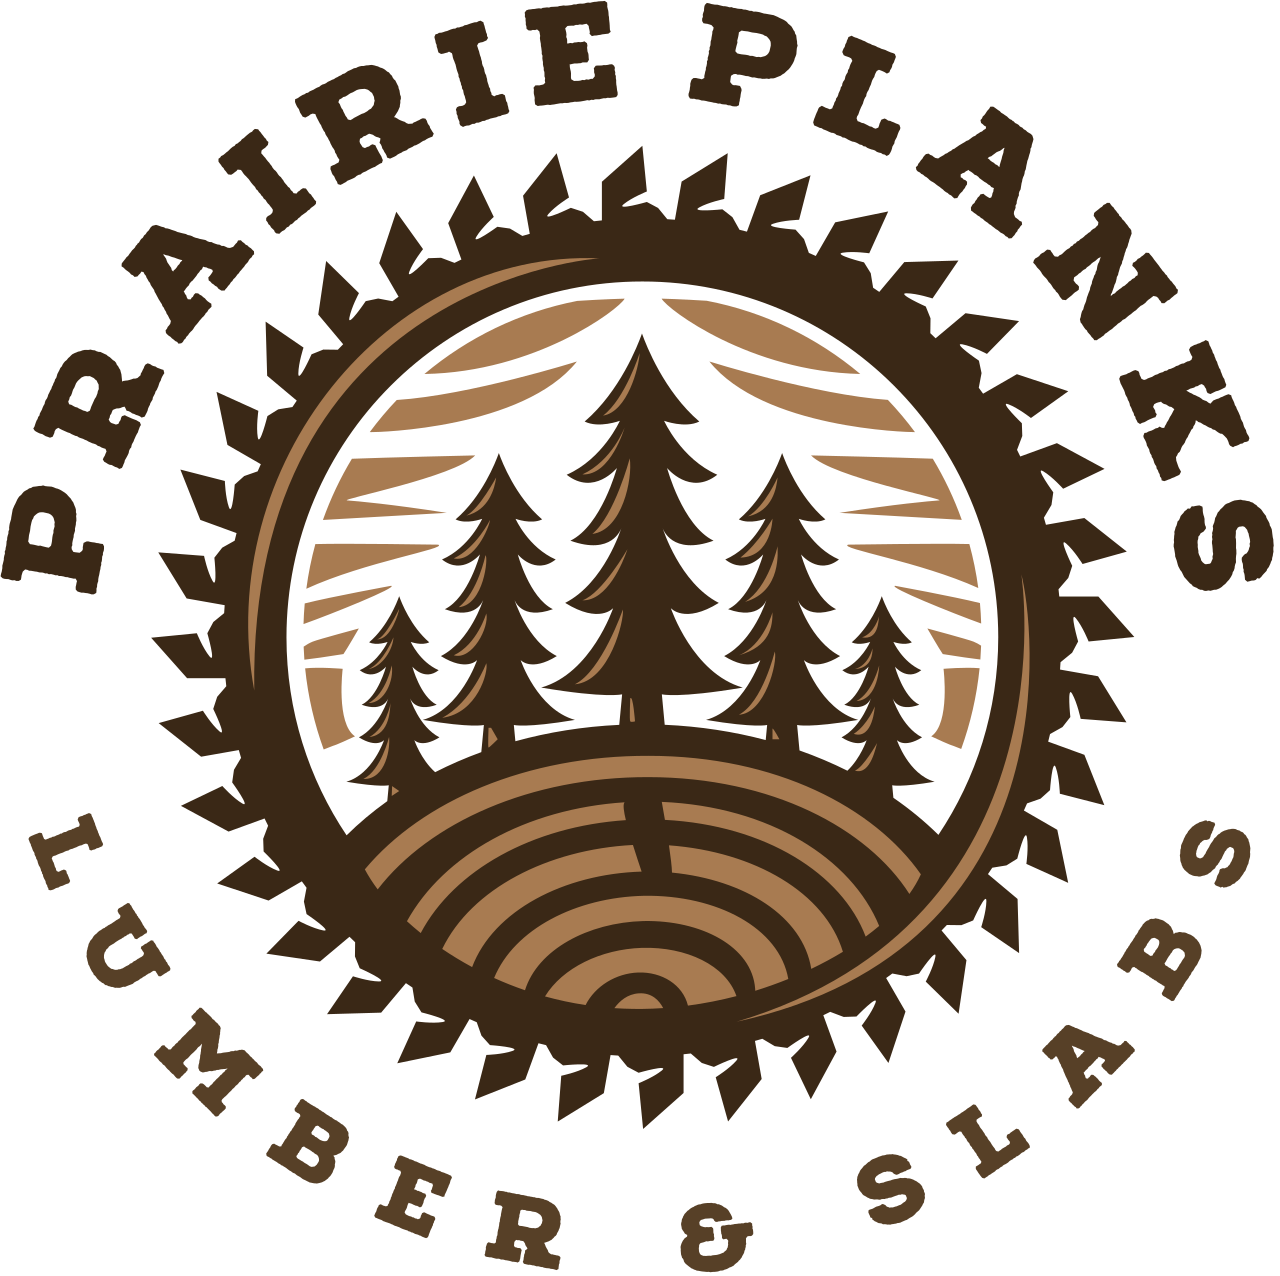 Prairie planks's logo